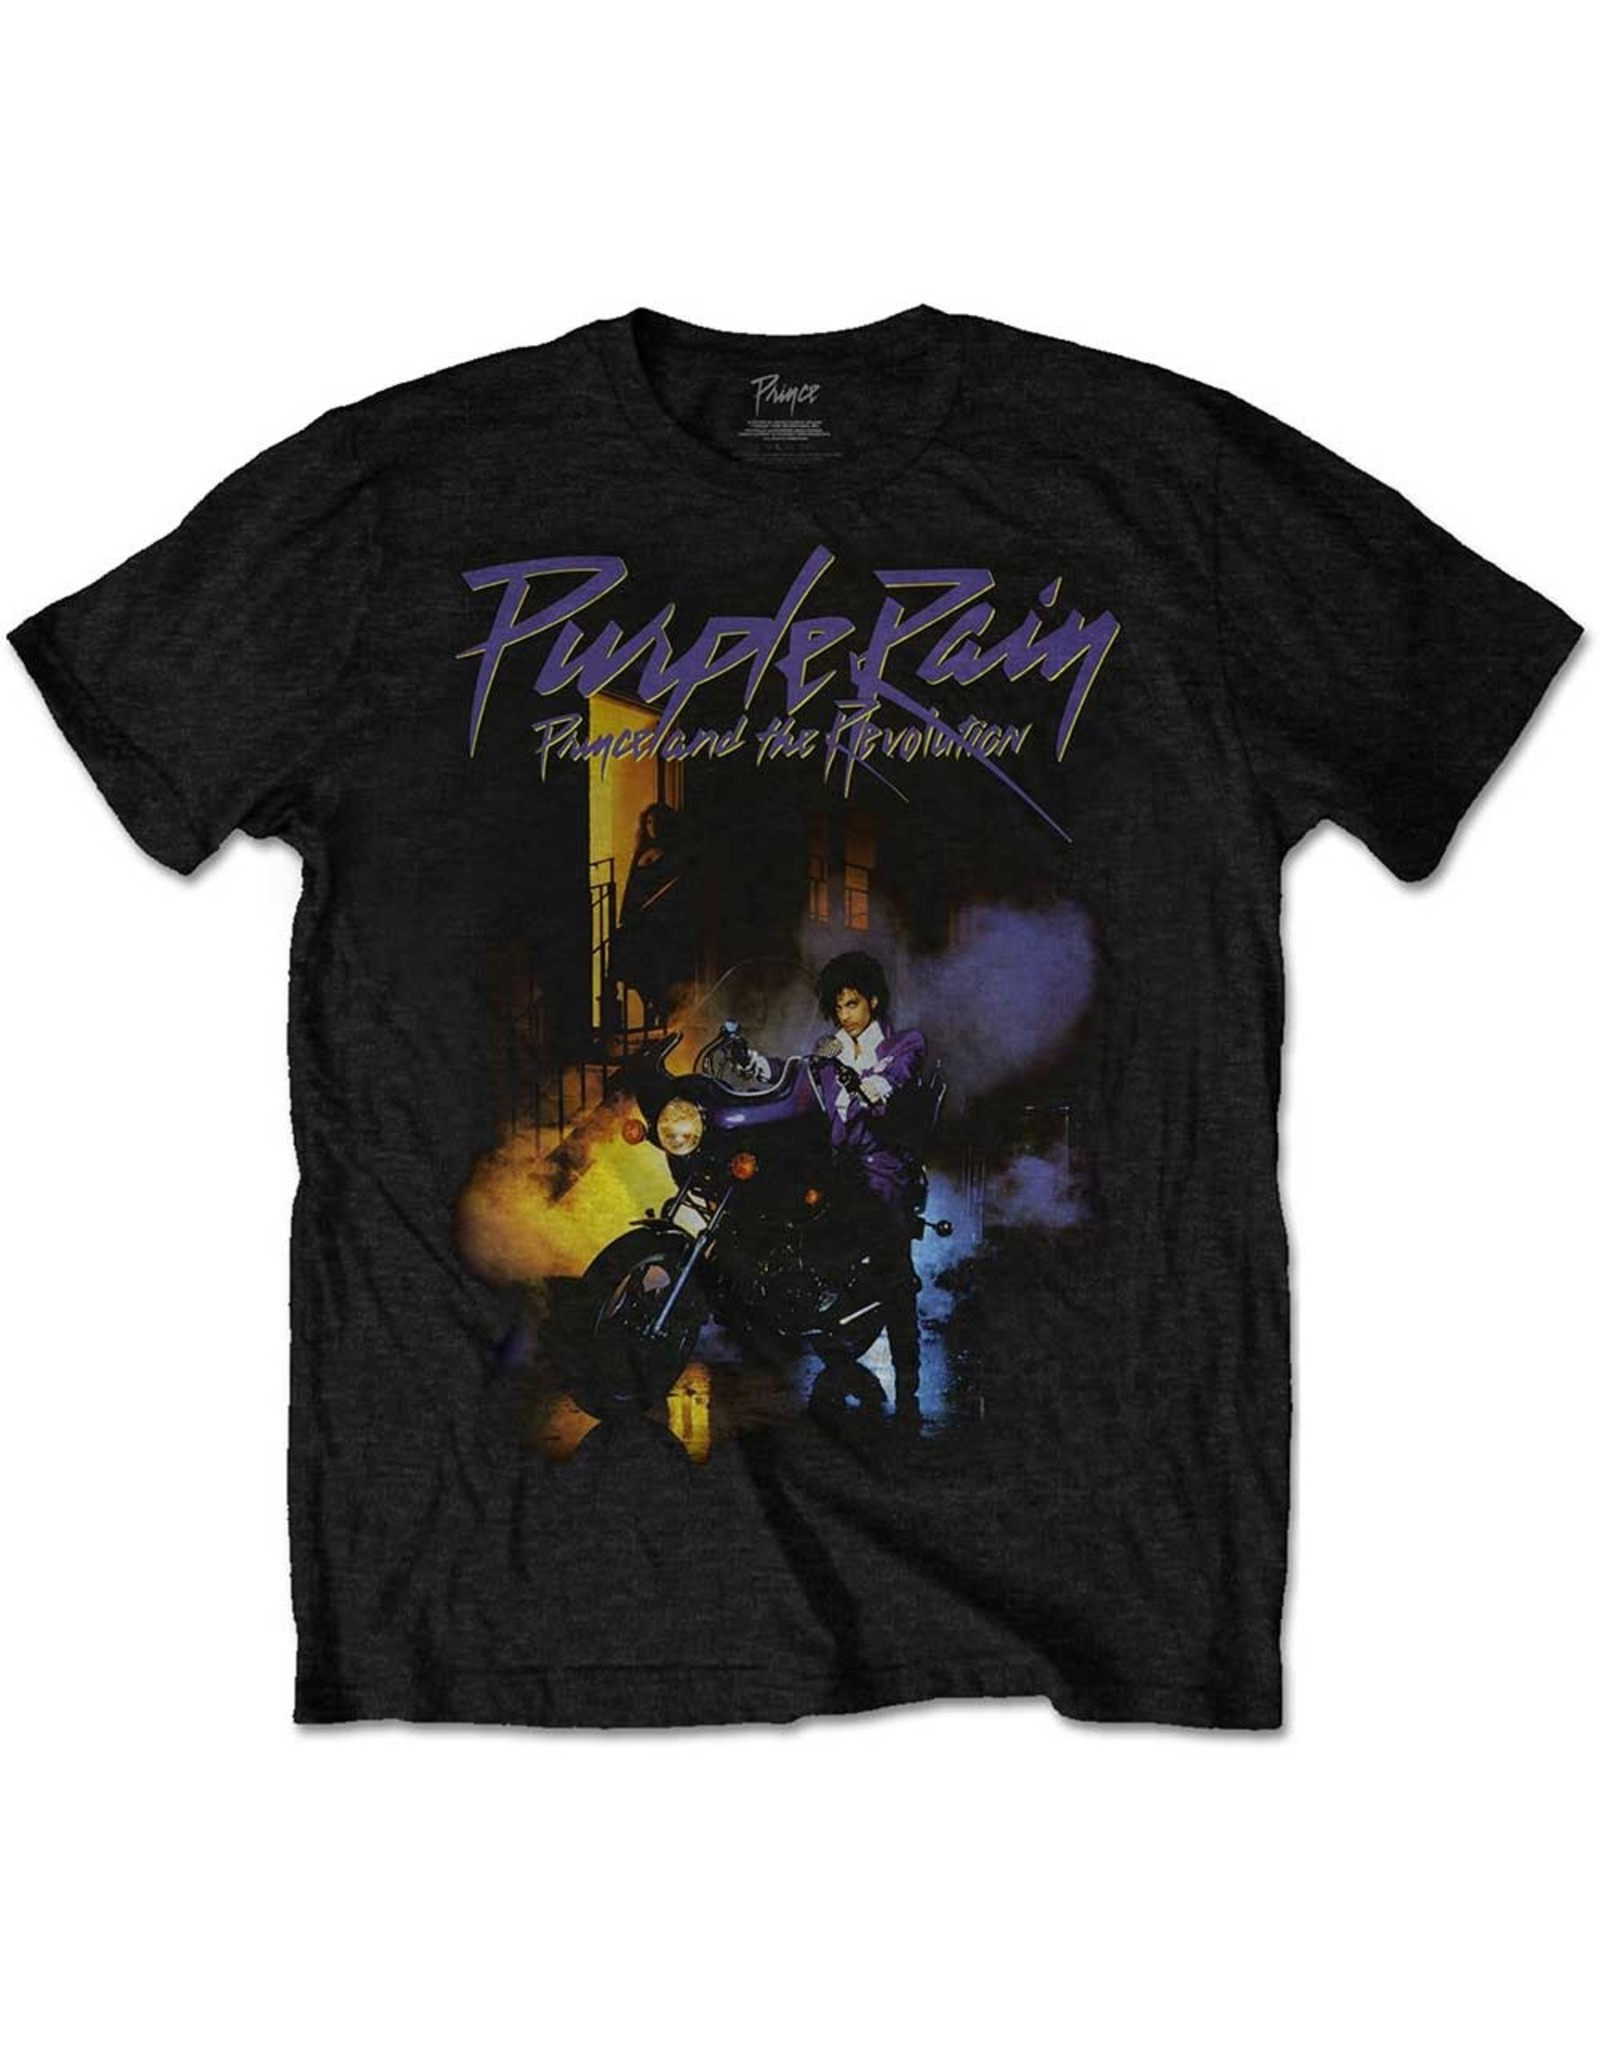 Prince / Purple Rain Tee